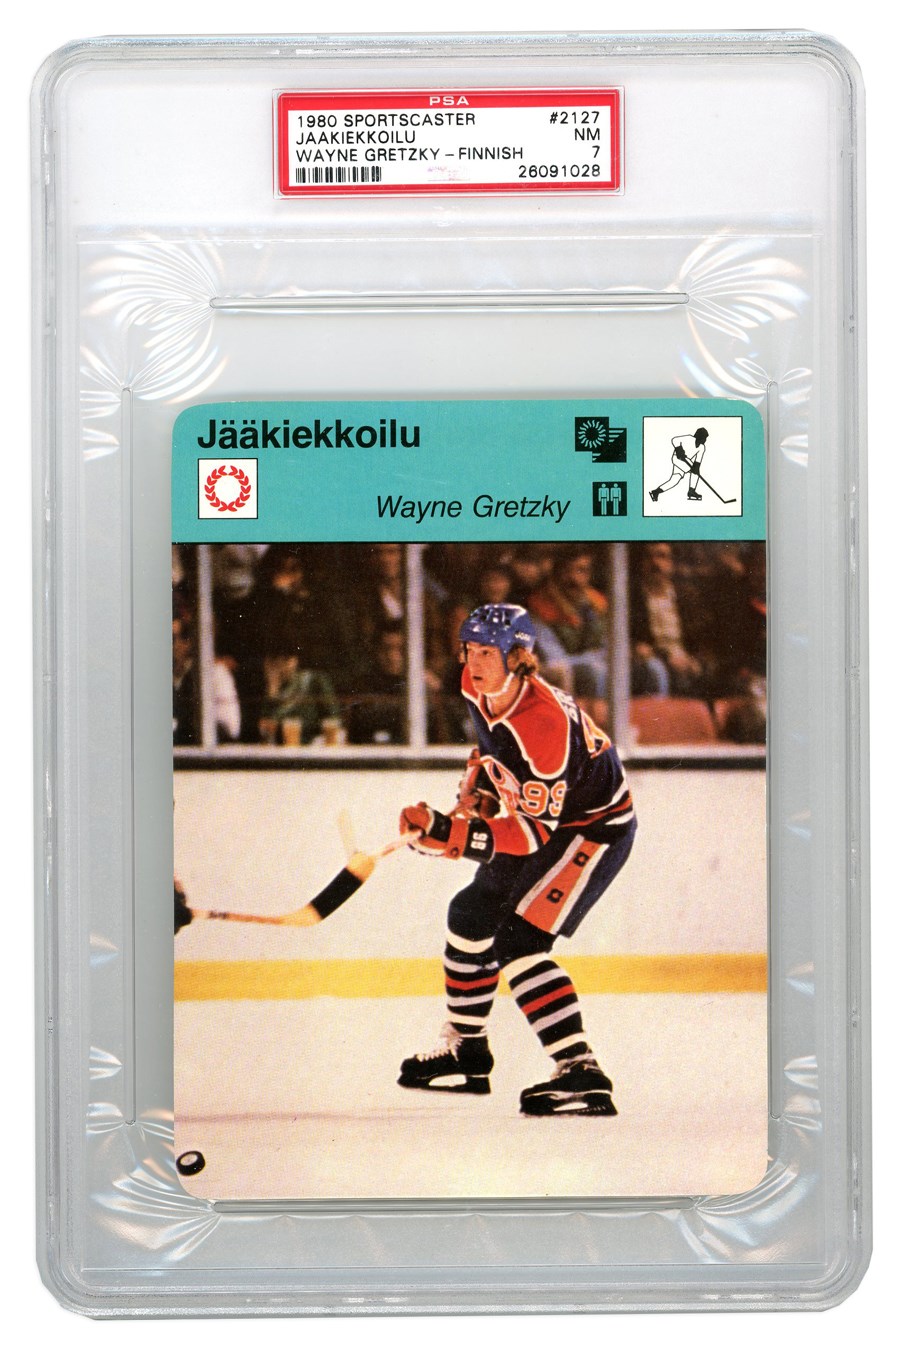 RARE 1980 Wayne Gretzky "Finnish" Sportscaster Hockey Card PSA7 NM